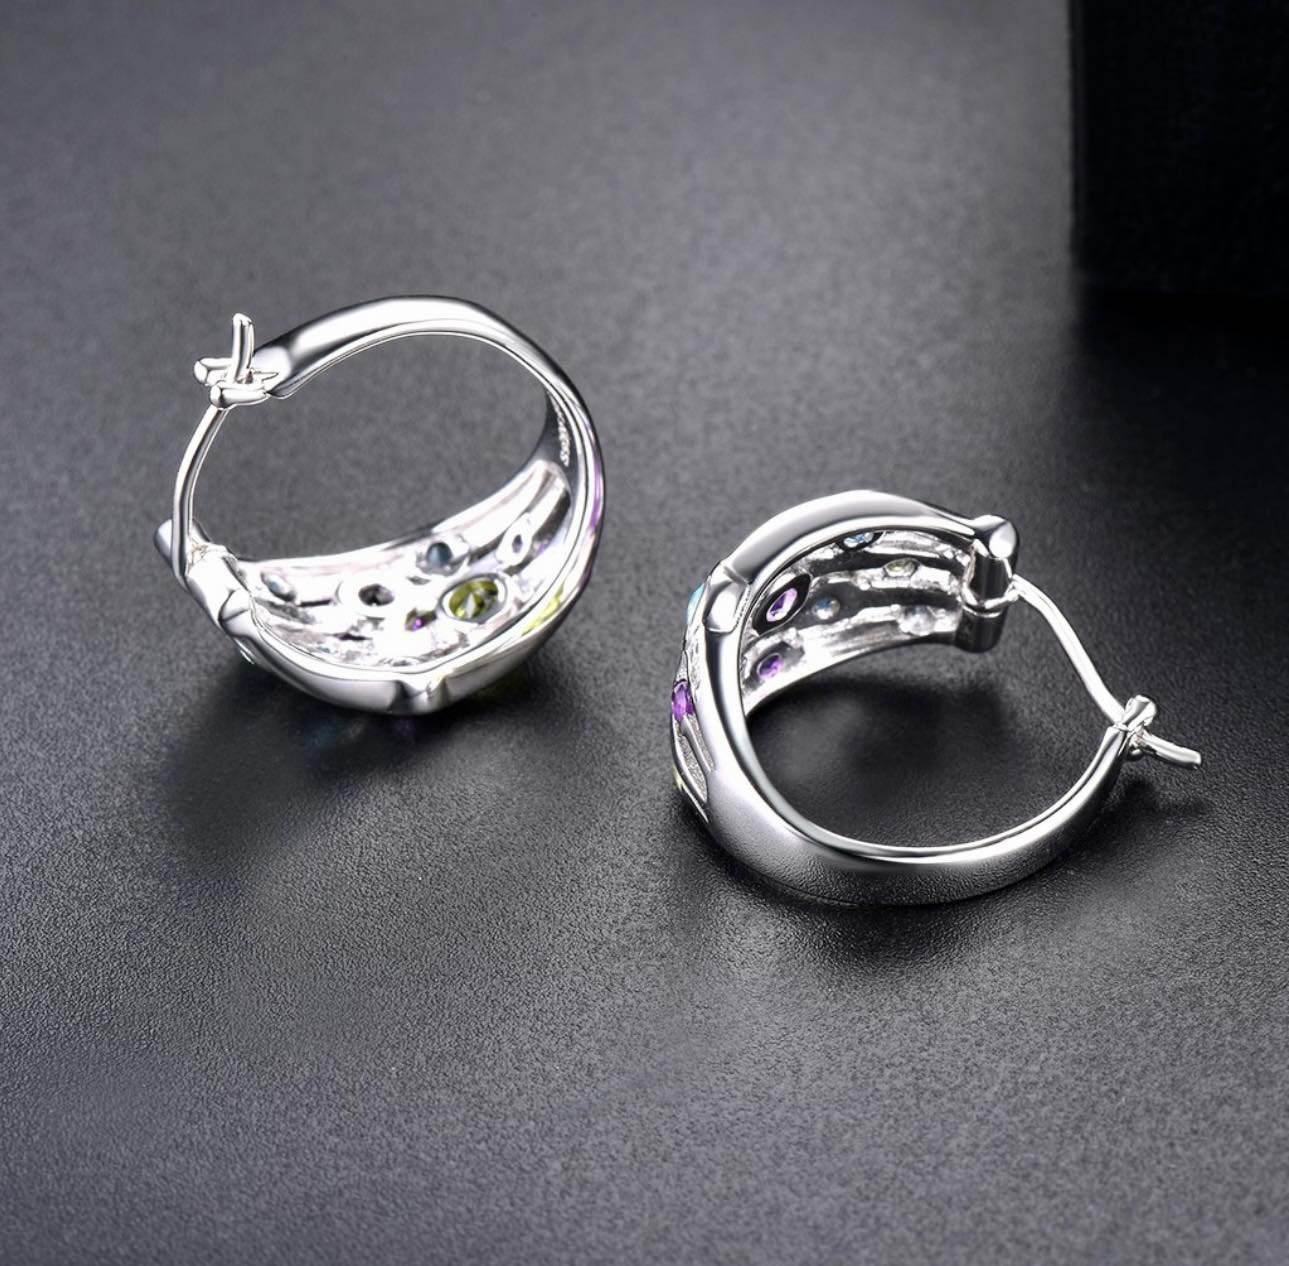 "Sabeana" Gemstone earrings